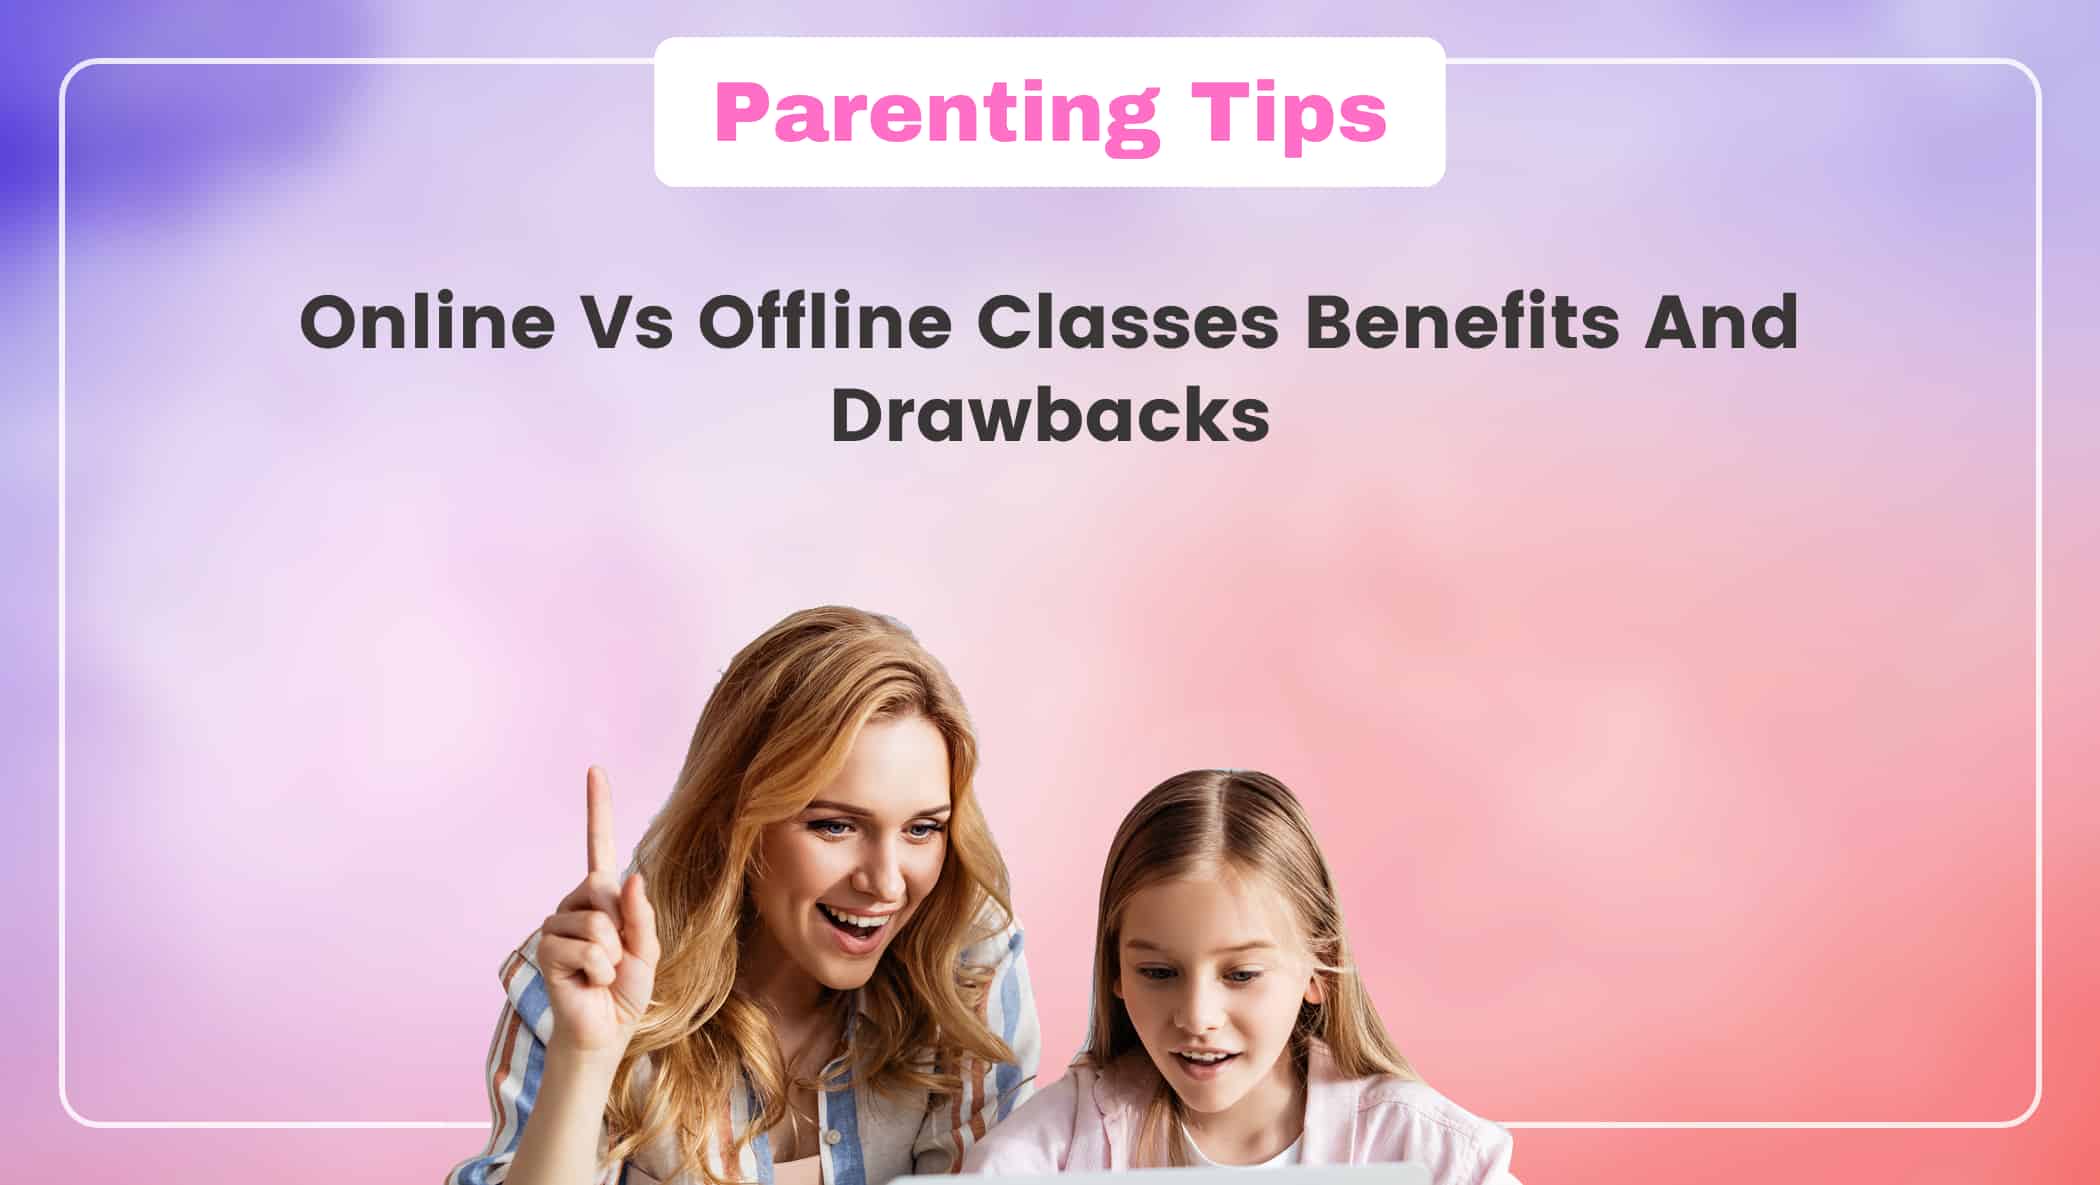 Online Vs Offline Classes Benefits And Drawbacks Image